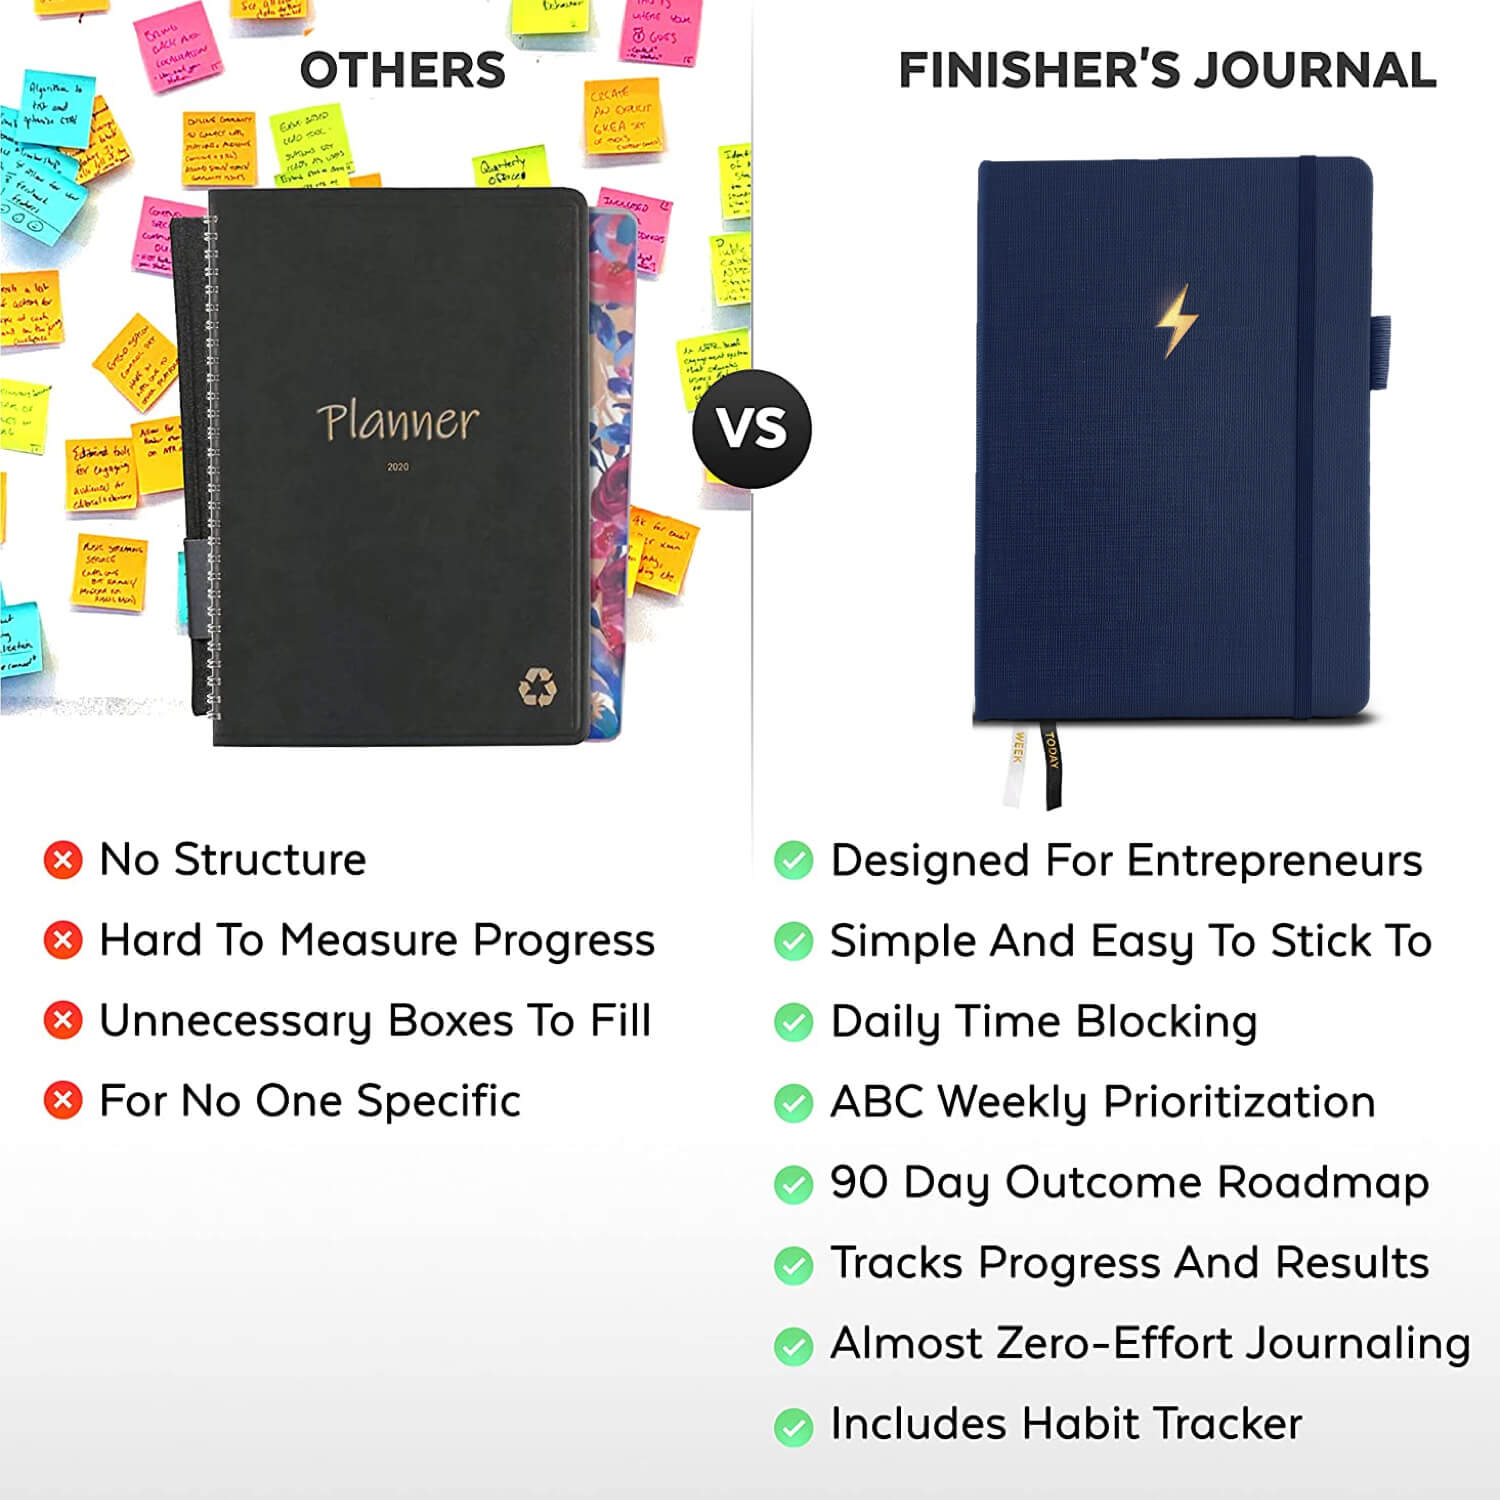 Finisher's Journal 3.0